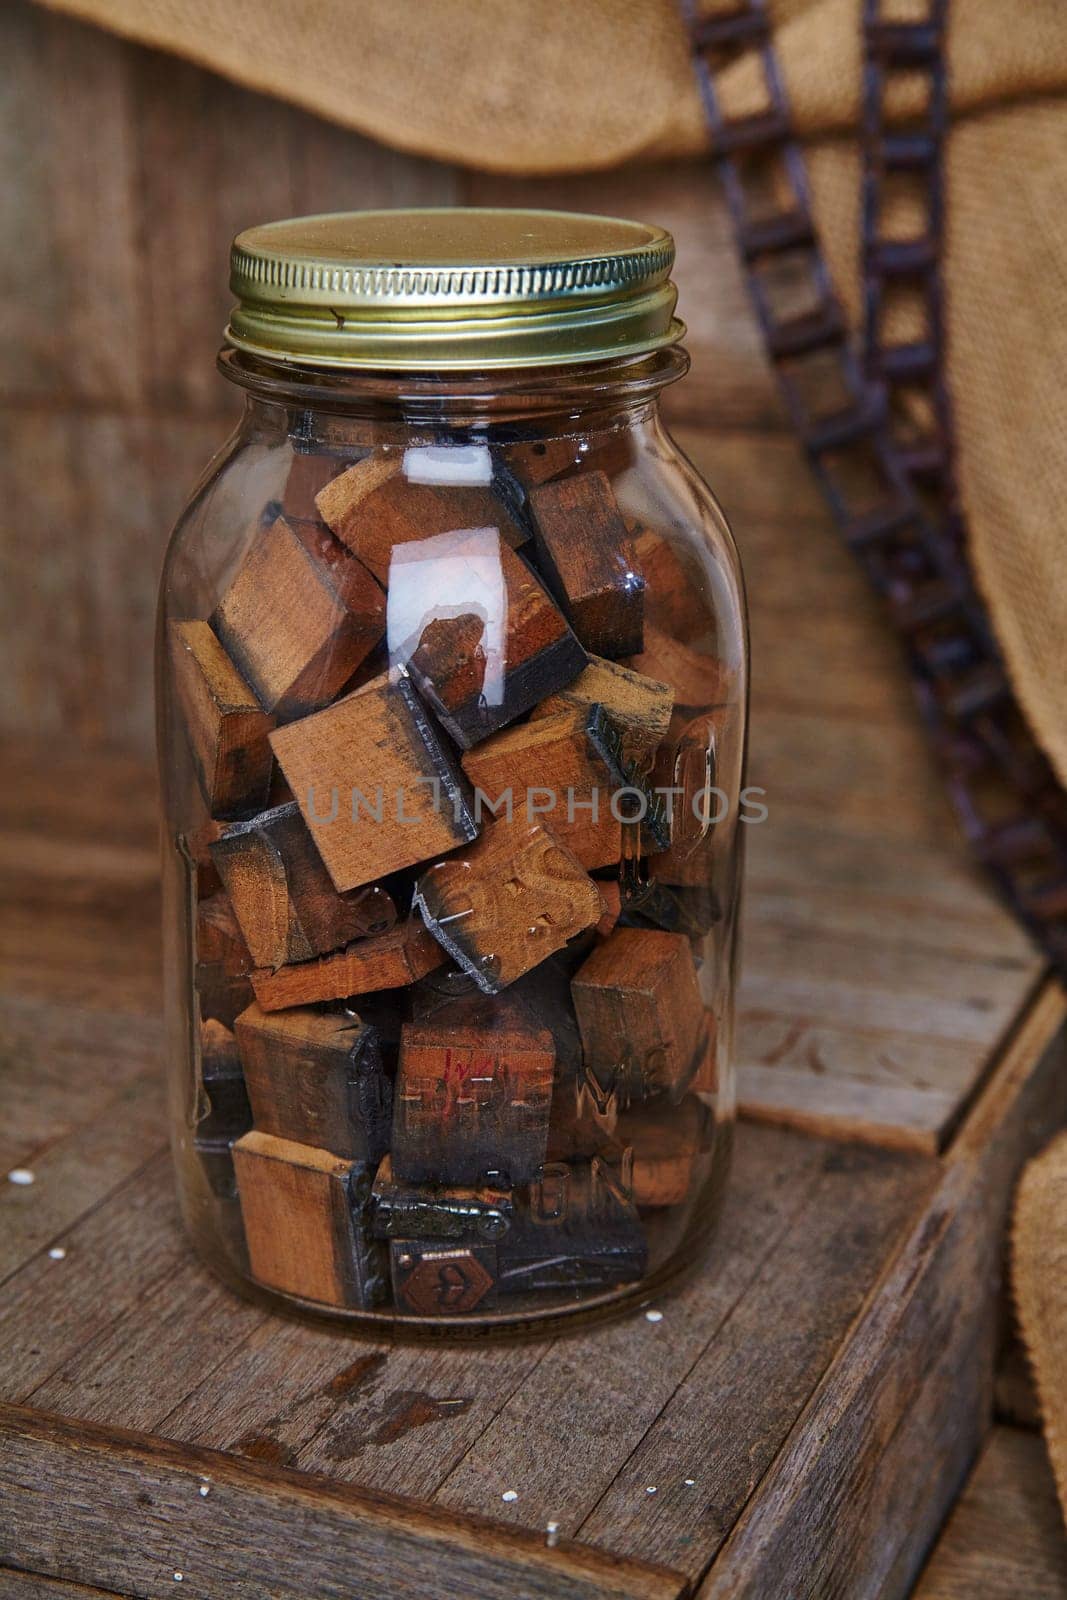 Vintage Wooden Letterpress Blocks in Glass Jar on Rustic Background by njproductions